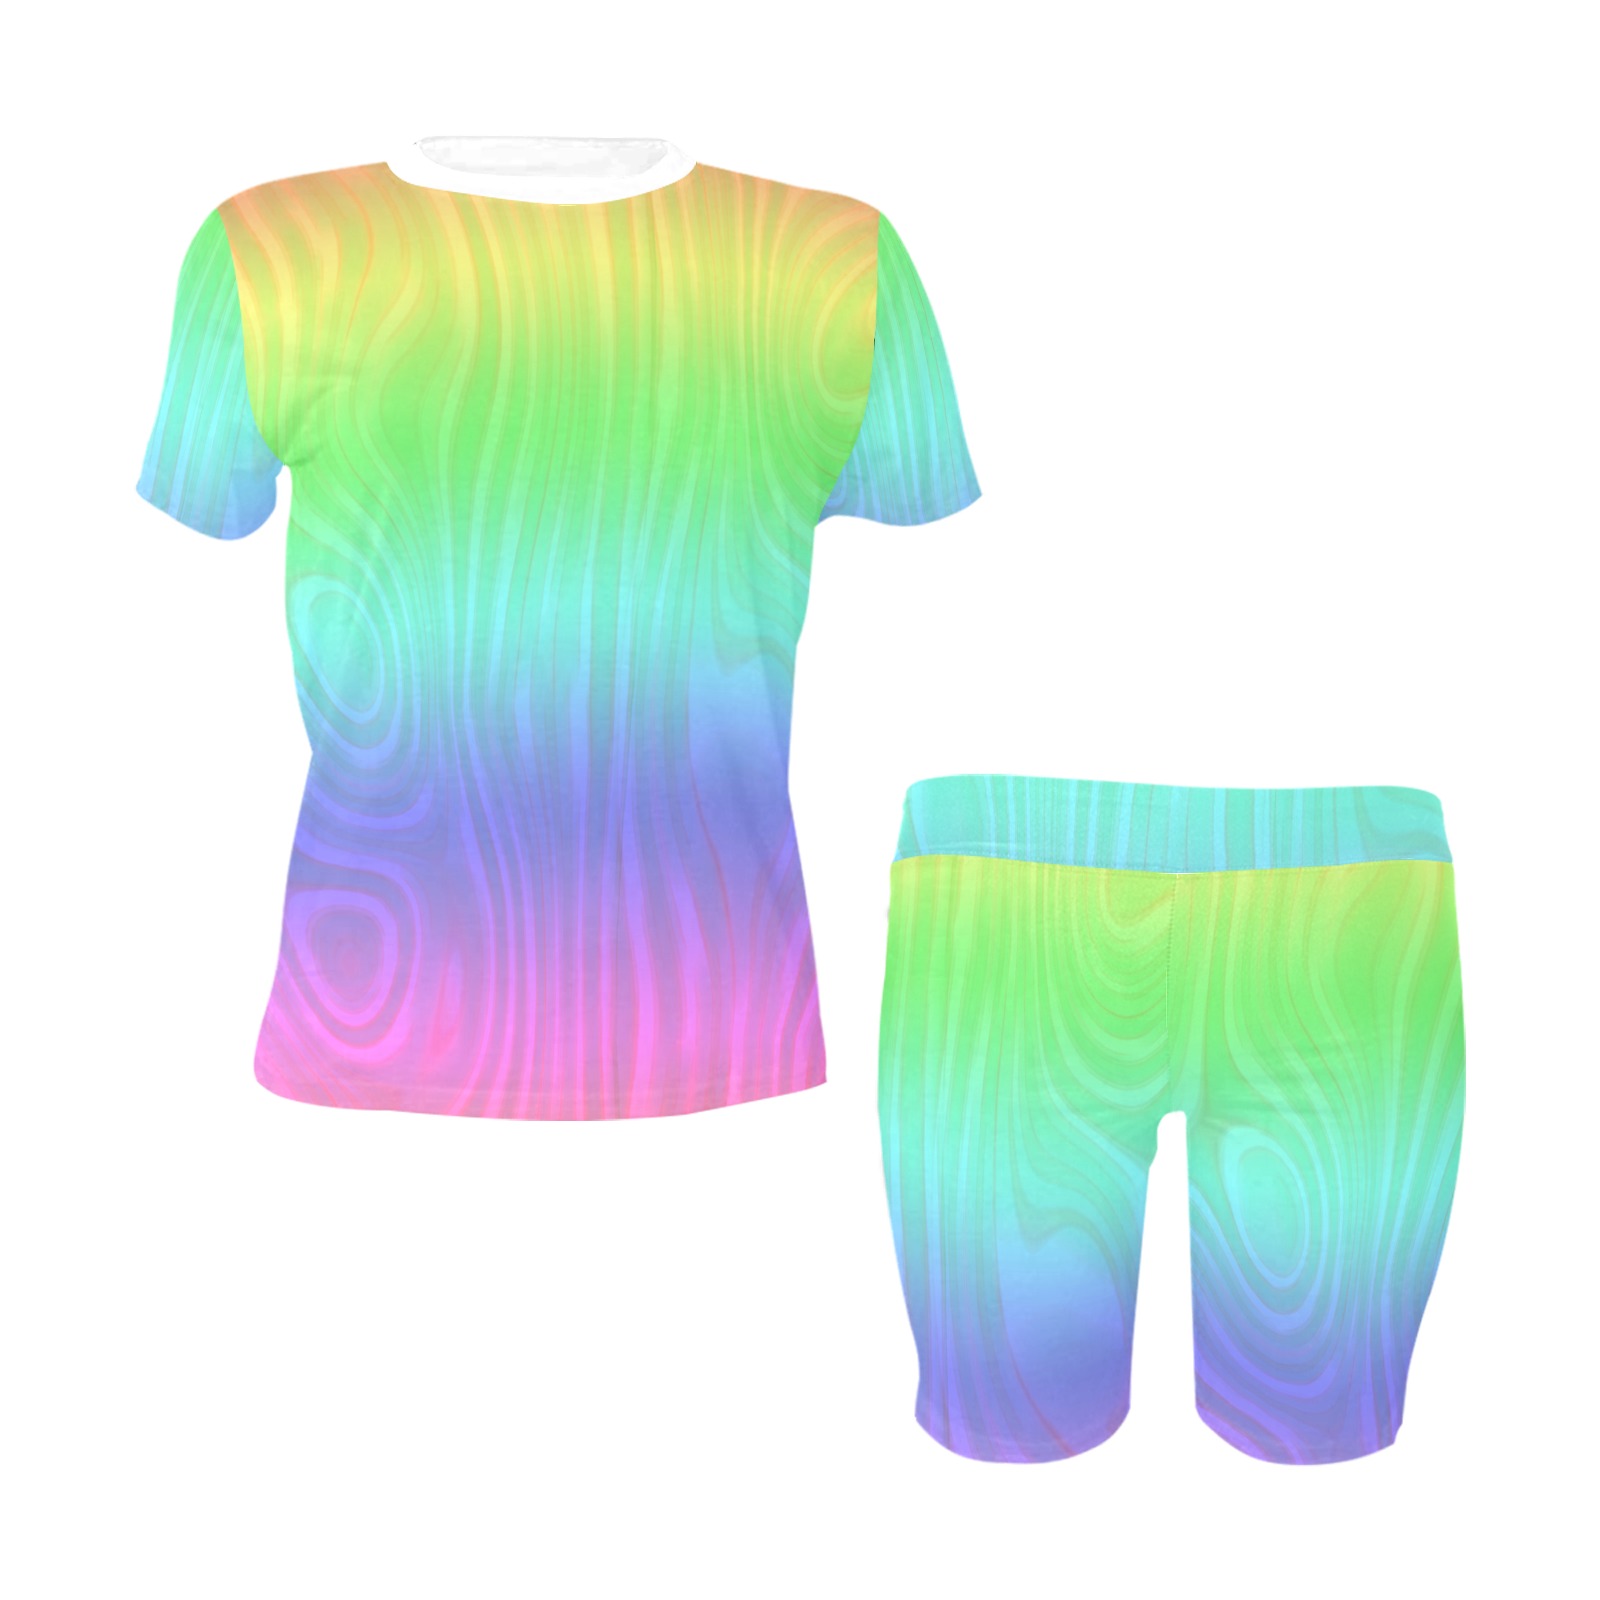 Groovy Pastel Rainbow Women's Short Yoga Set